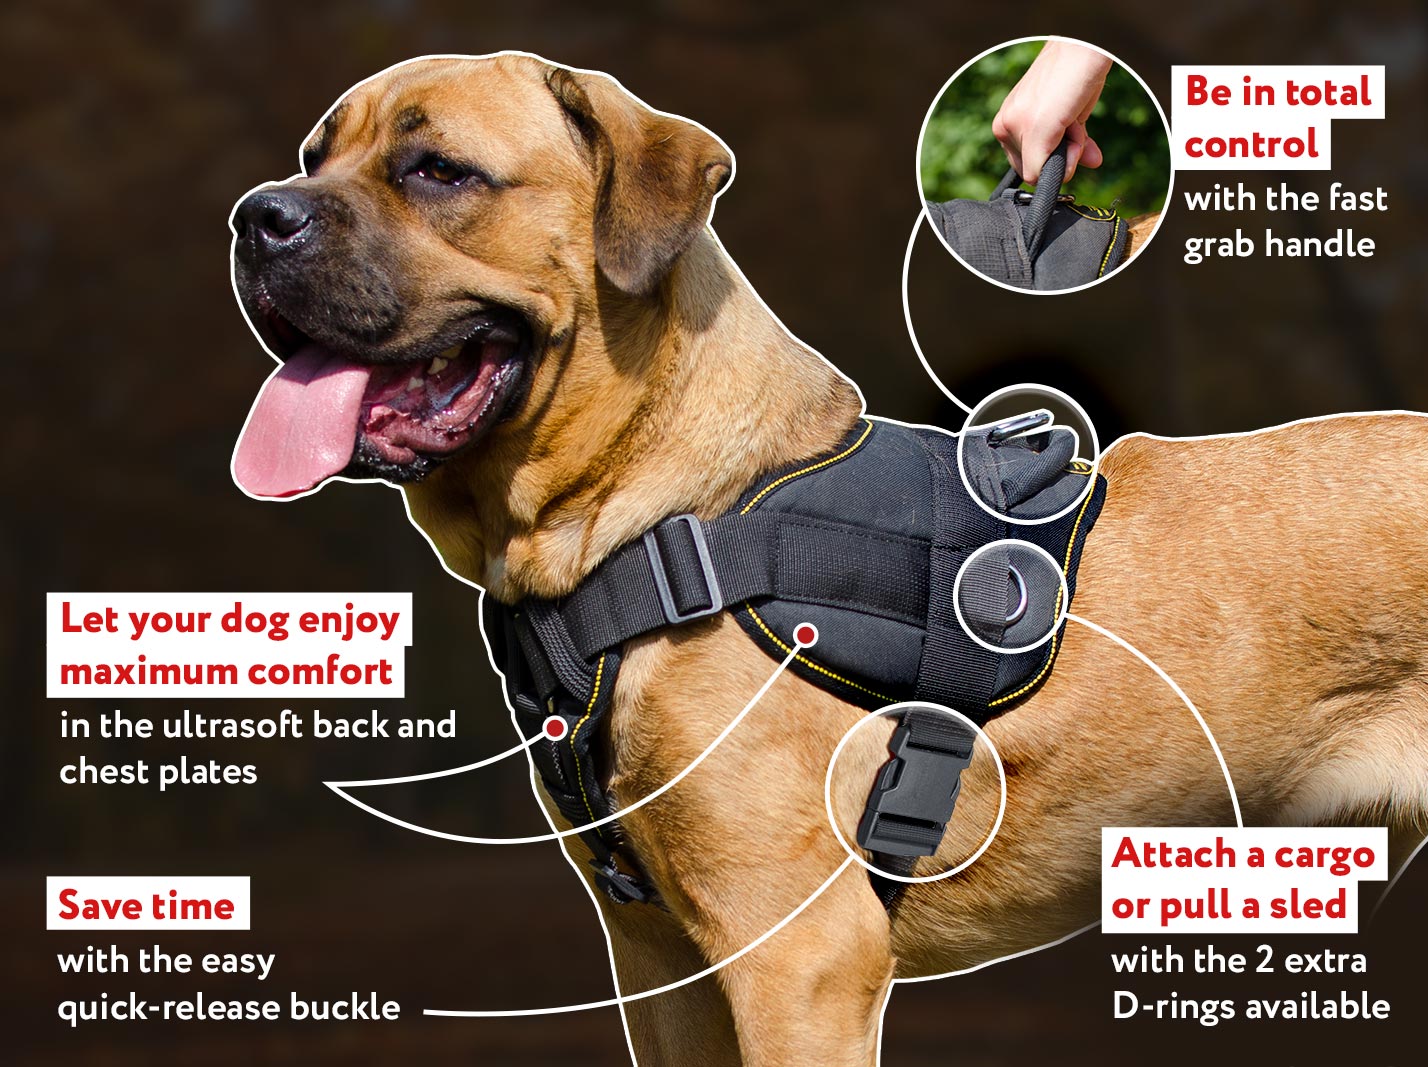 Cane Corso Breed: Dog Muzzle, Harness, Collar, Leash, Toys, Bite Sleeve